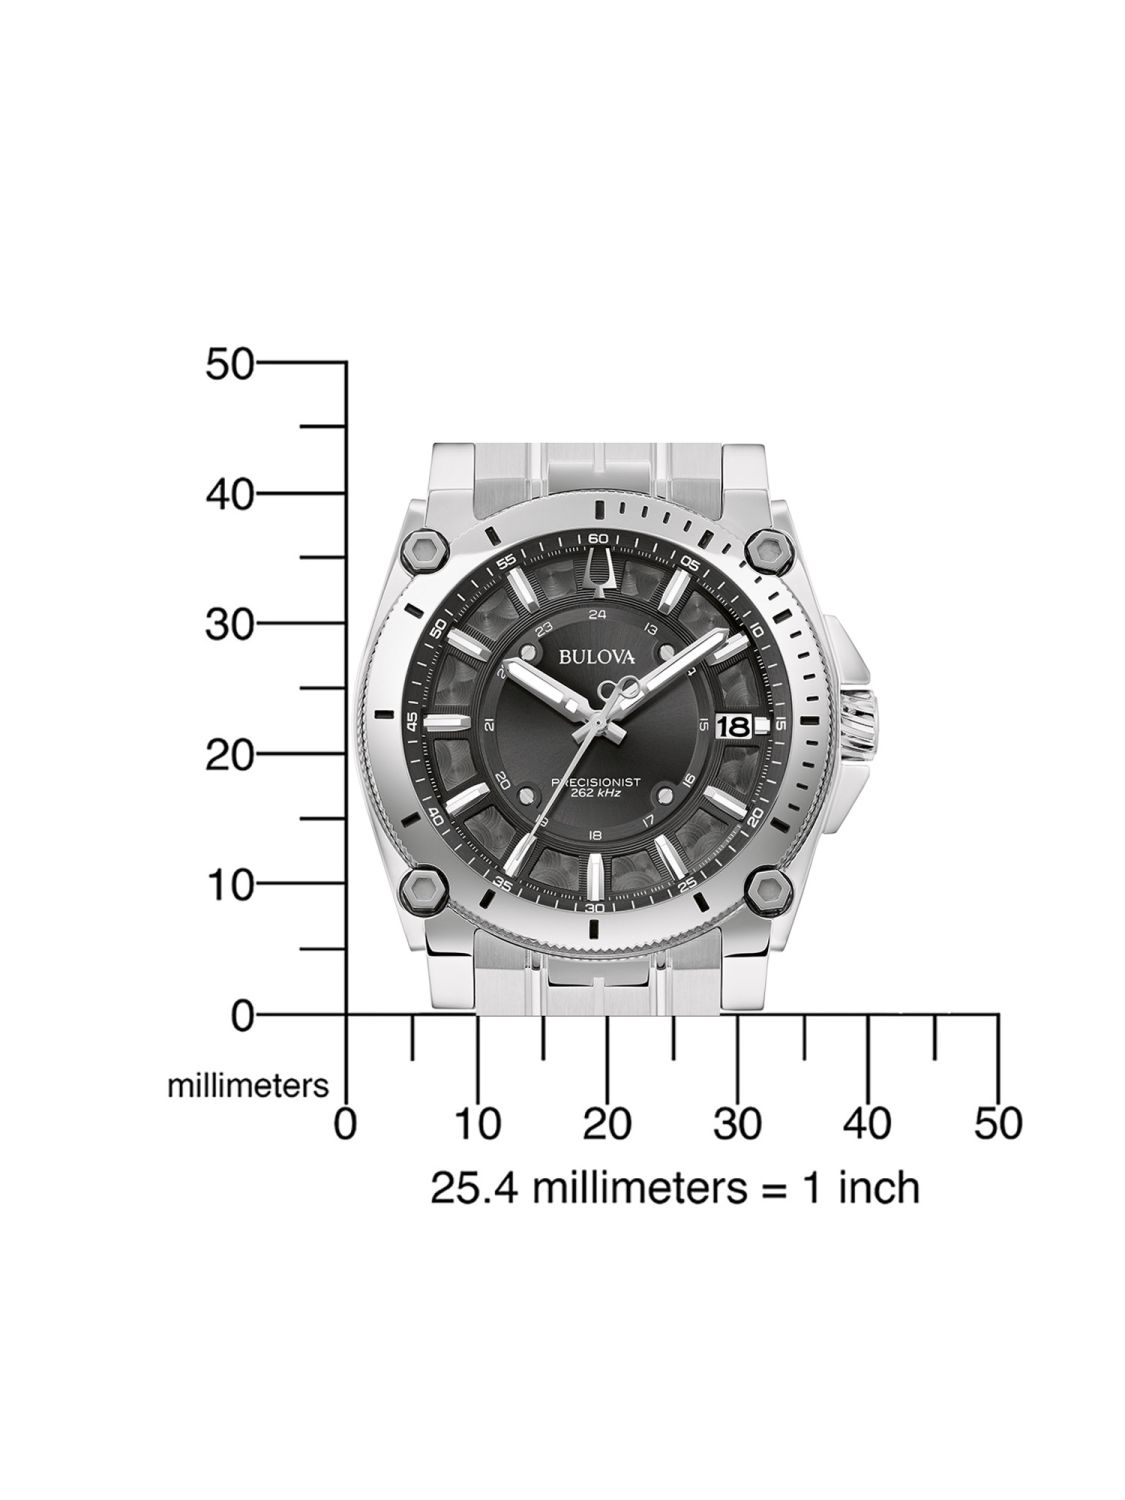 Bulova Men\'s Wristwatch Luxury Steel/Black • 96B417 uhrcenter